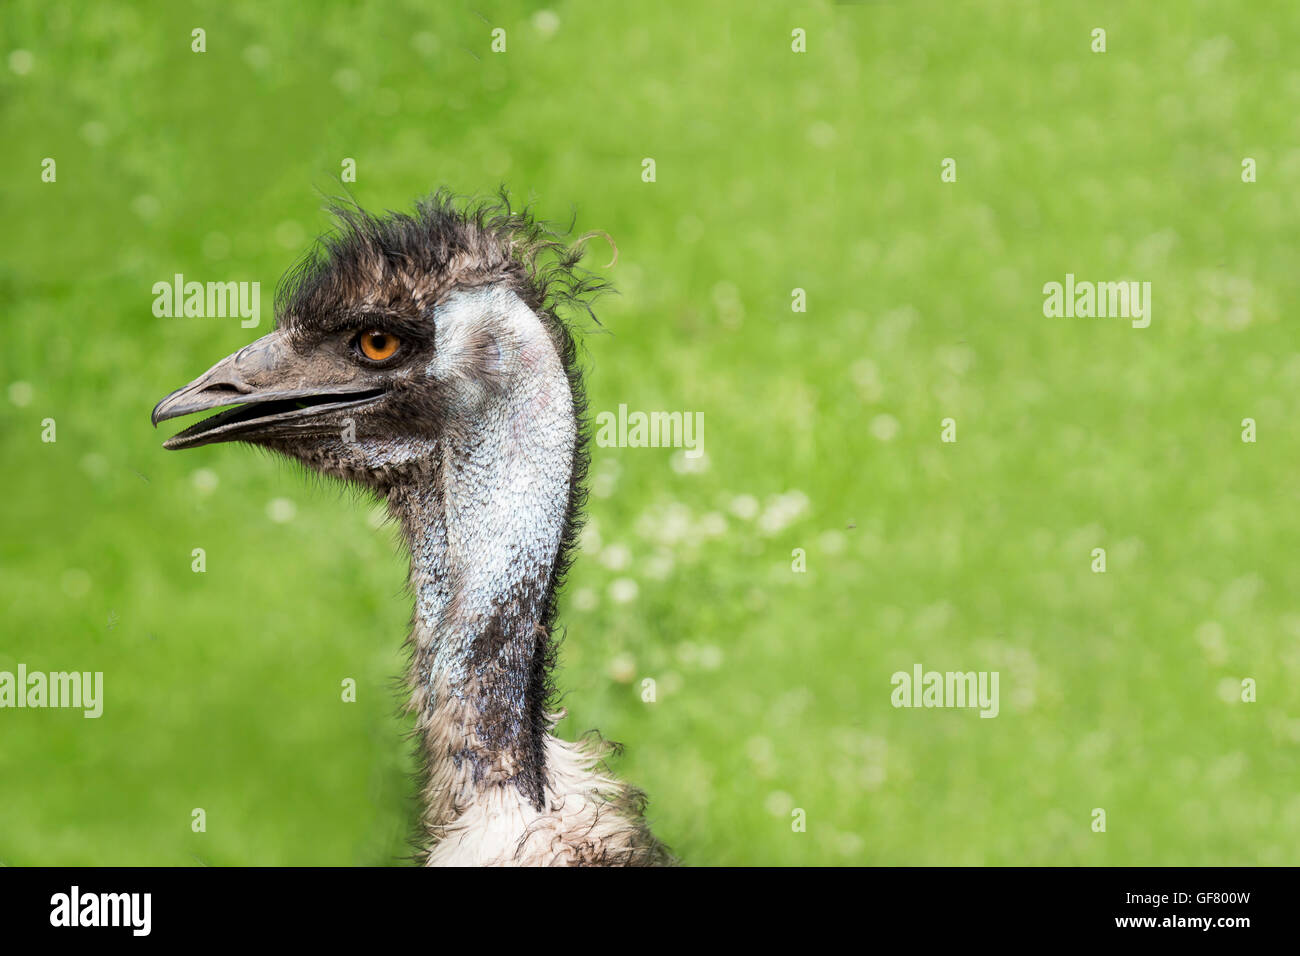 An Emu at the Toronto Zoo, Canada. Stock Photo